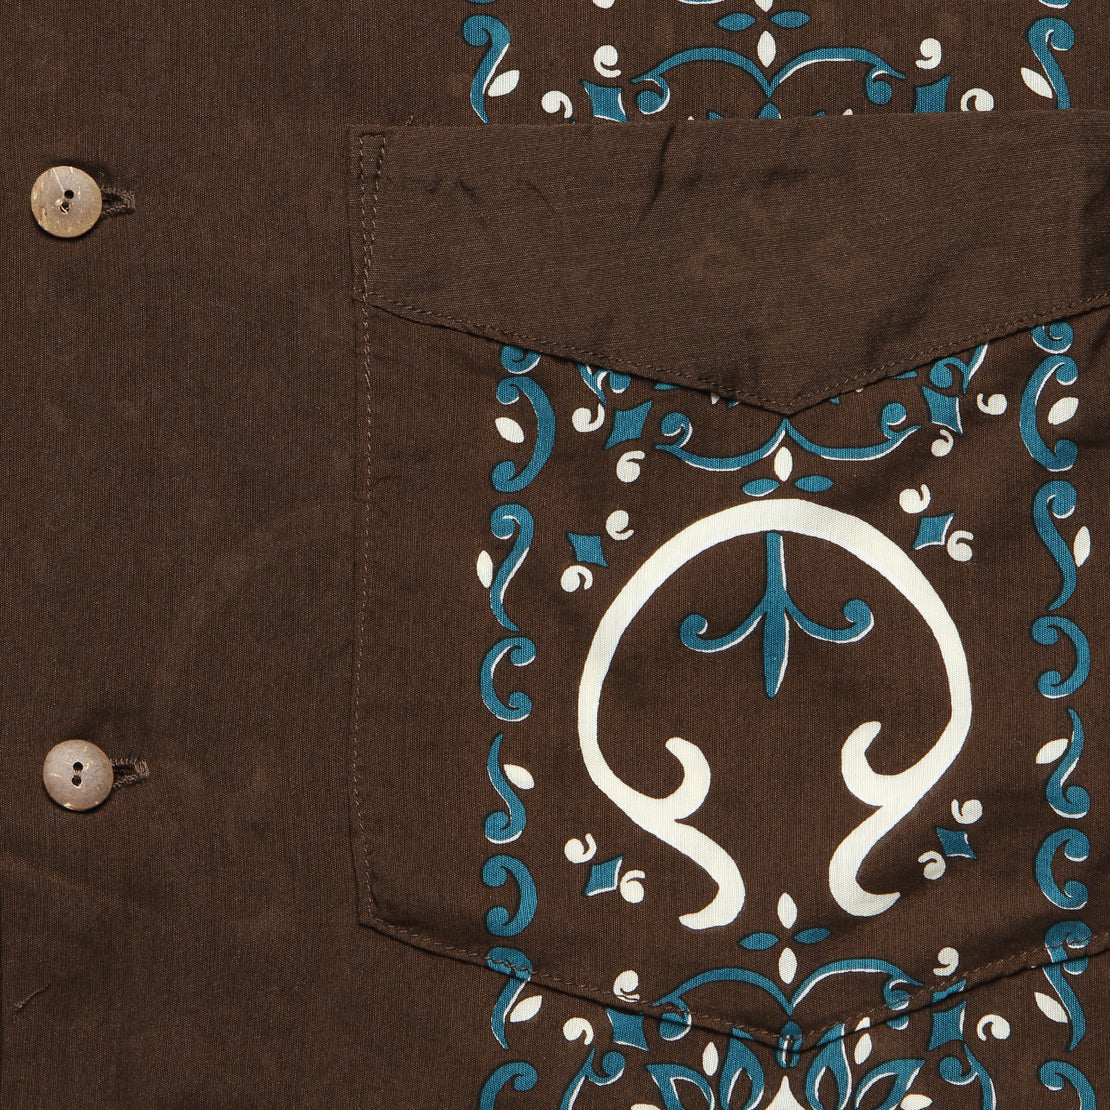 Havananaja Silk Rayon Cuba Shirt - Brown - Kapital - STAG Provisions - Tops - S/S Woven - Other Pattern